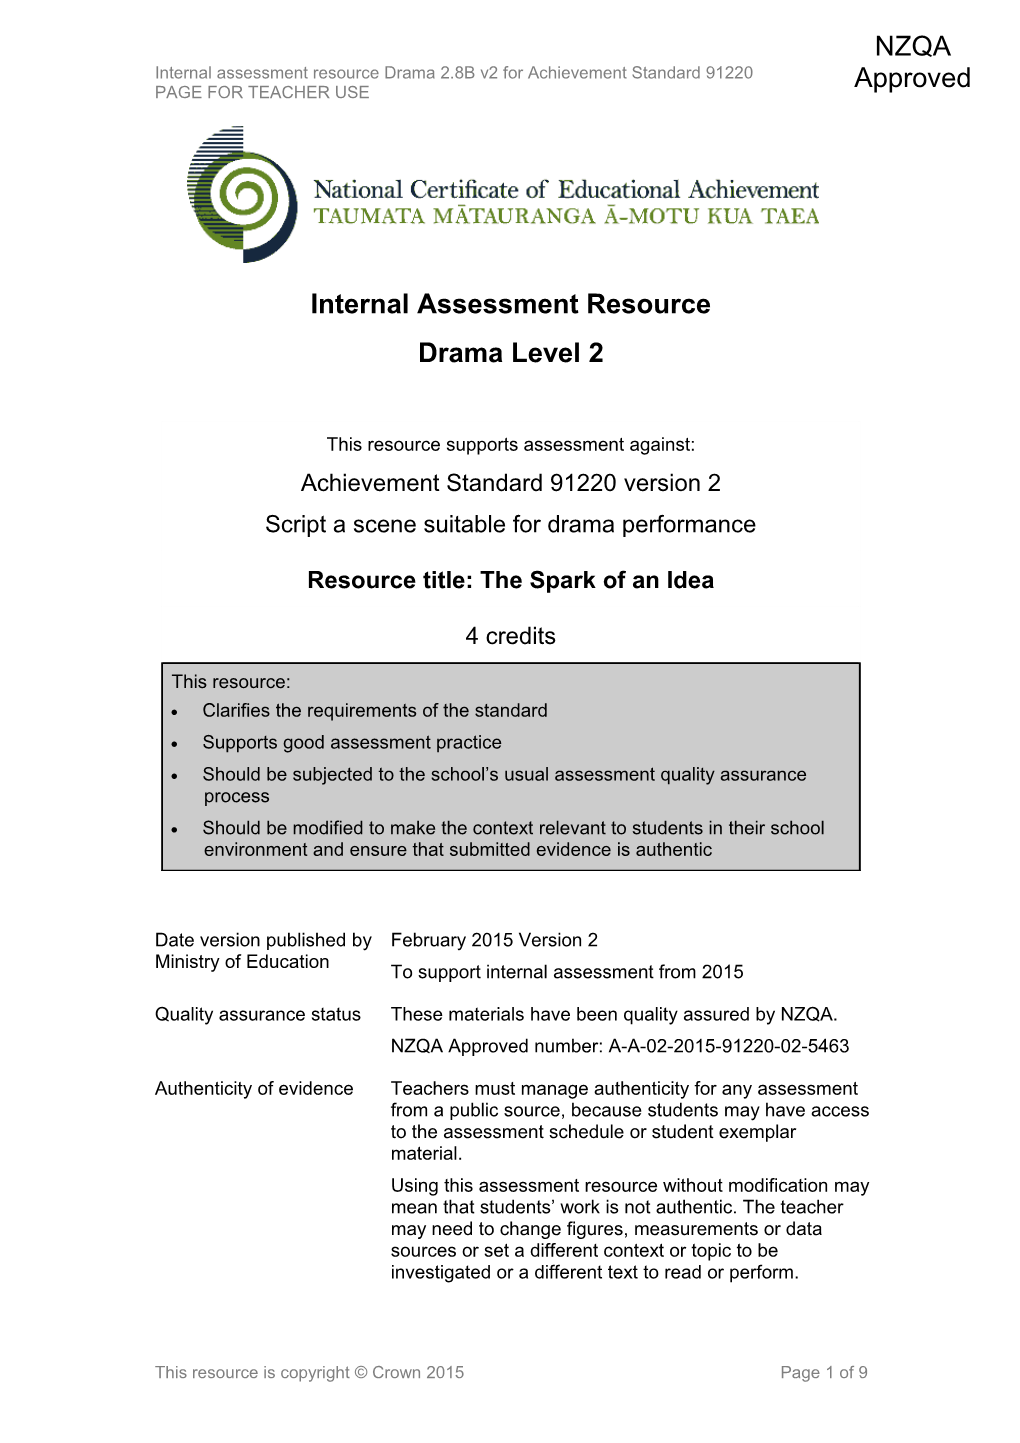 Level 2 Drama Internal Assessment Resource